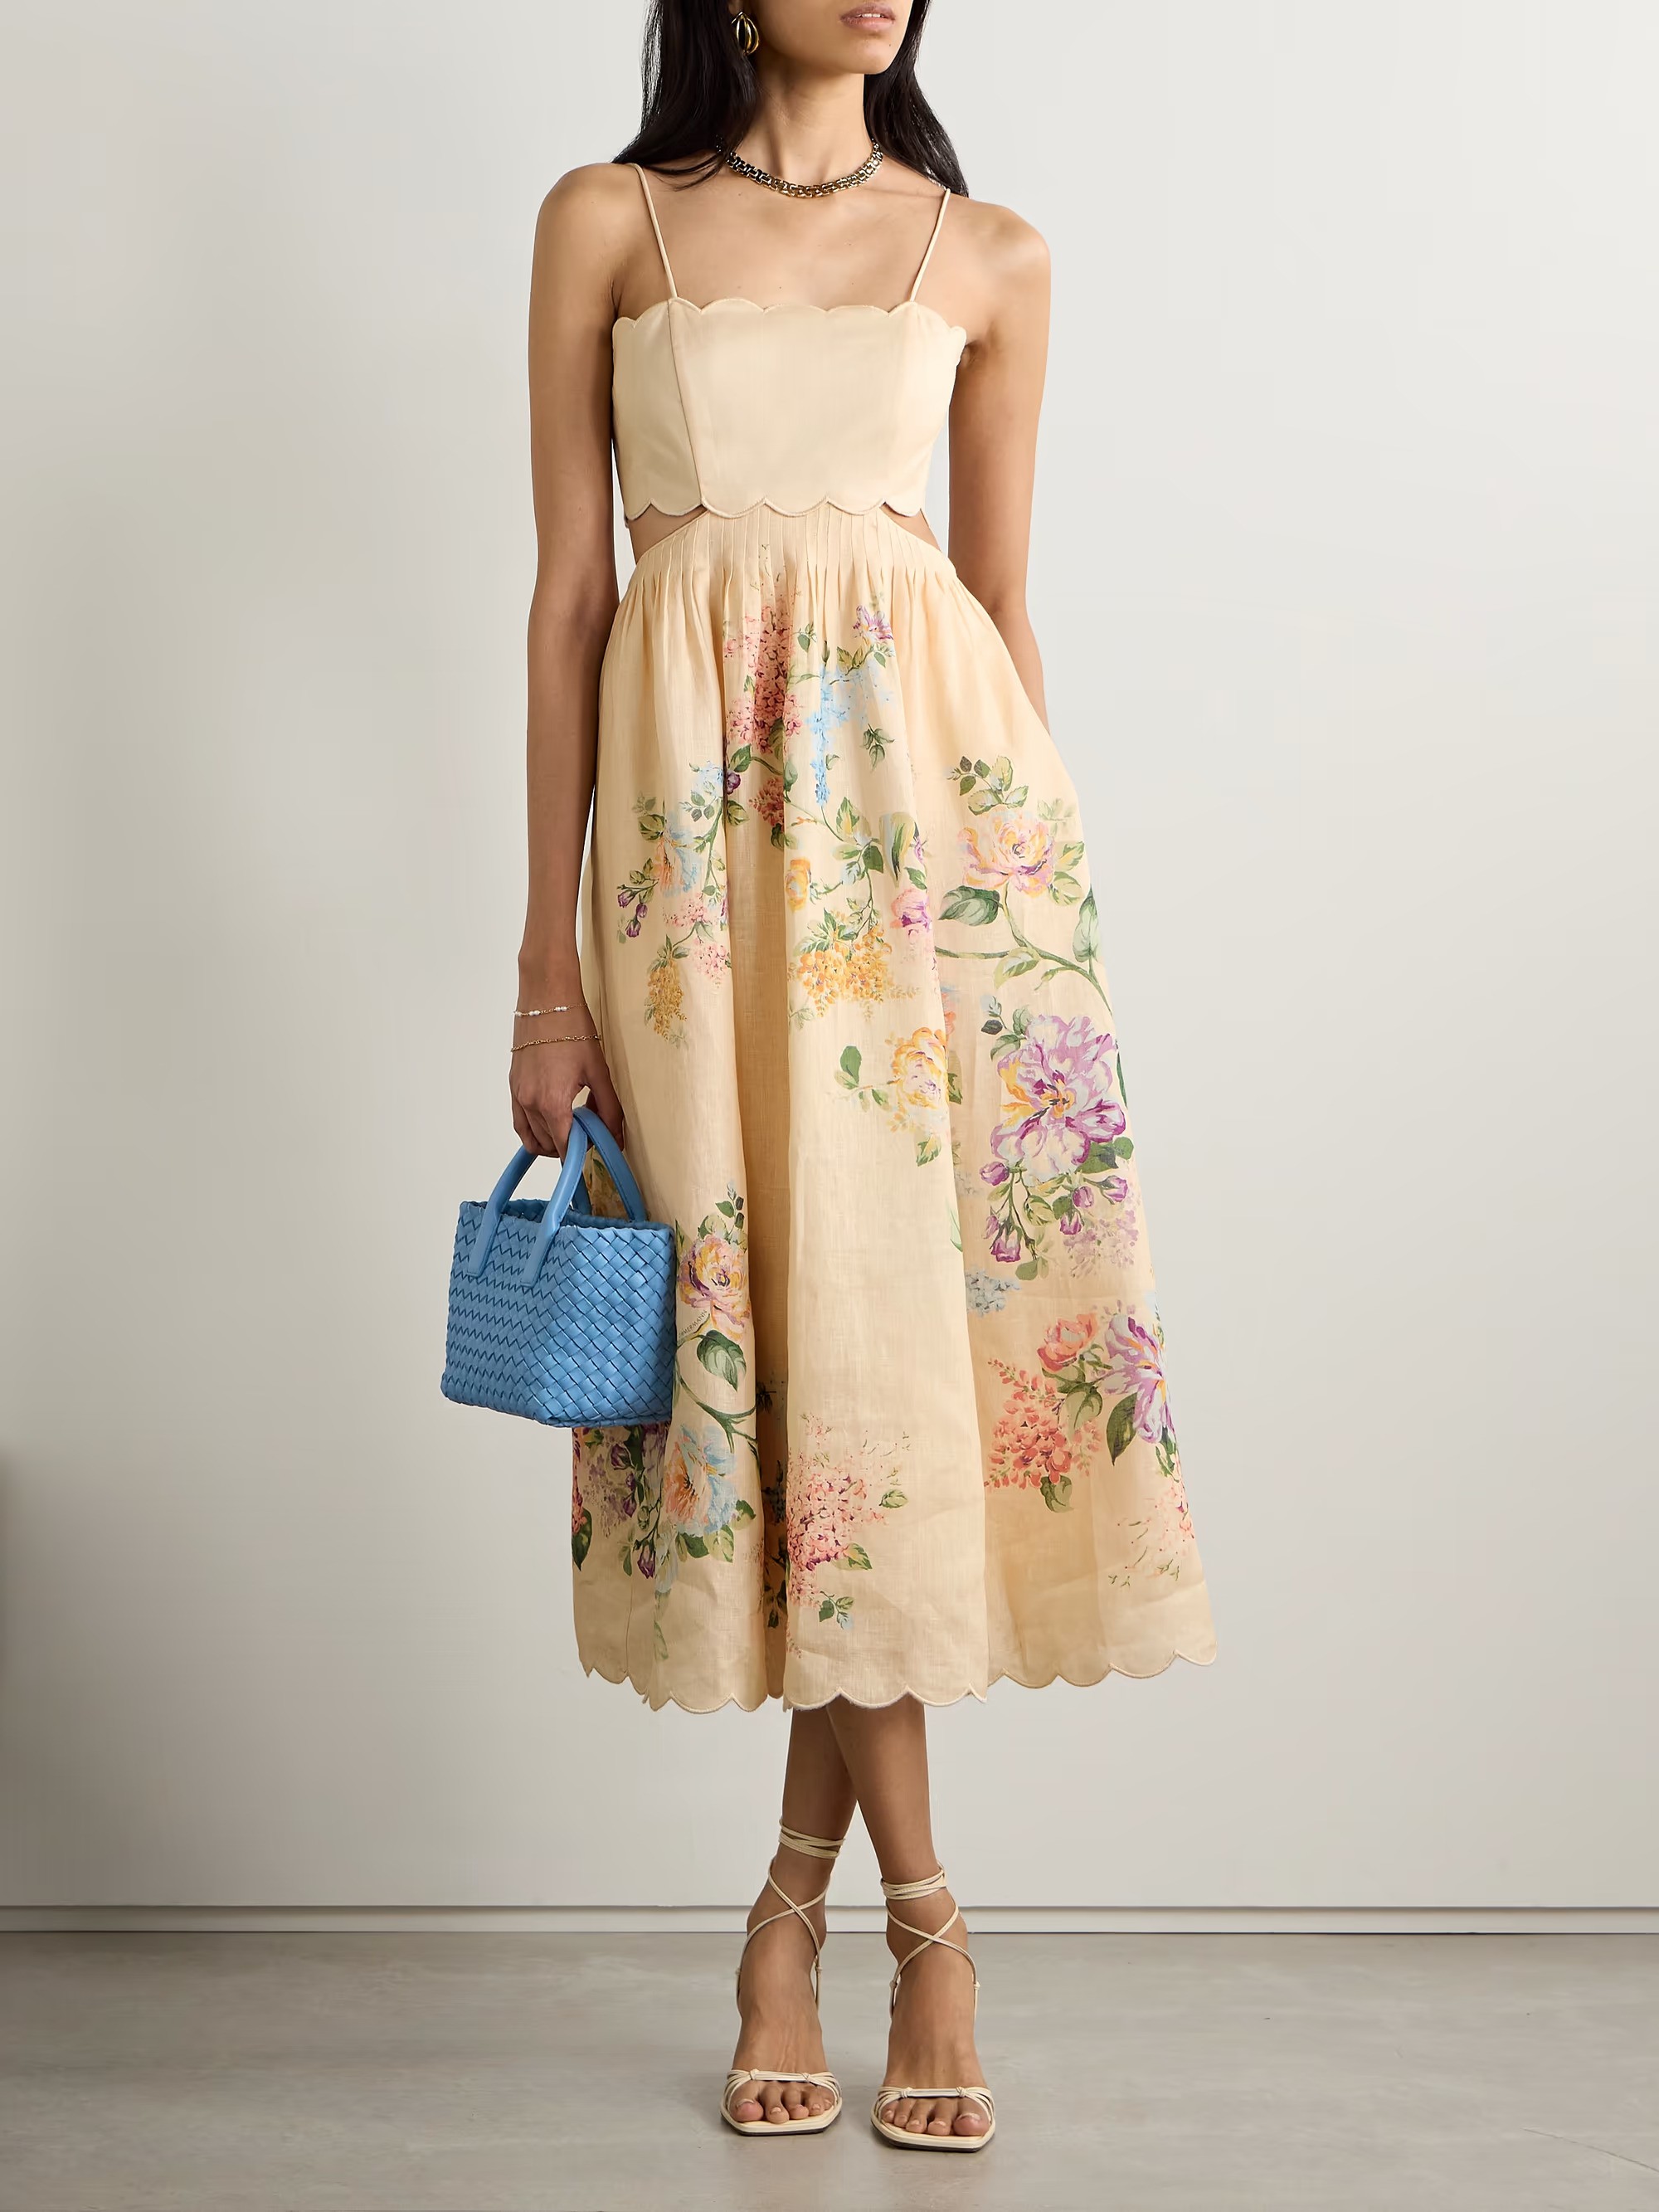 ZIMMERMANN, Halliday Cutout Scalloped Pintucked Floral-Print Linen Midi Dress